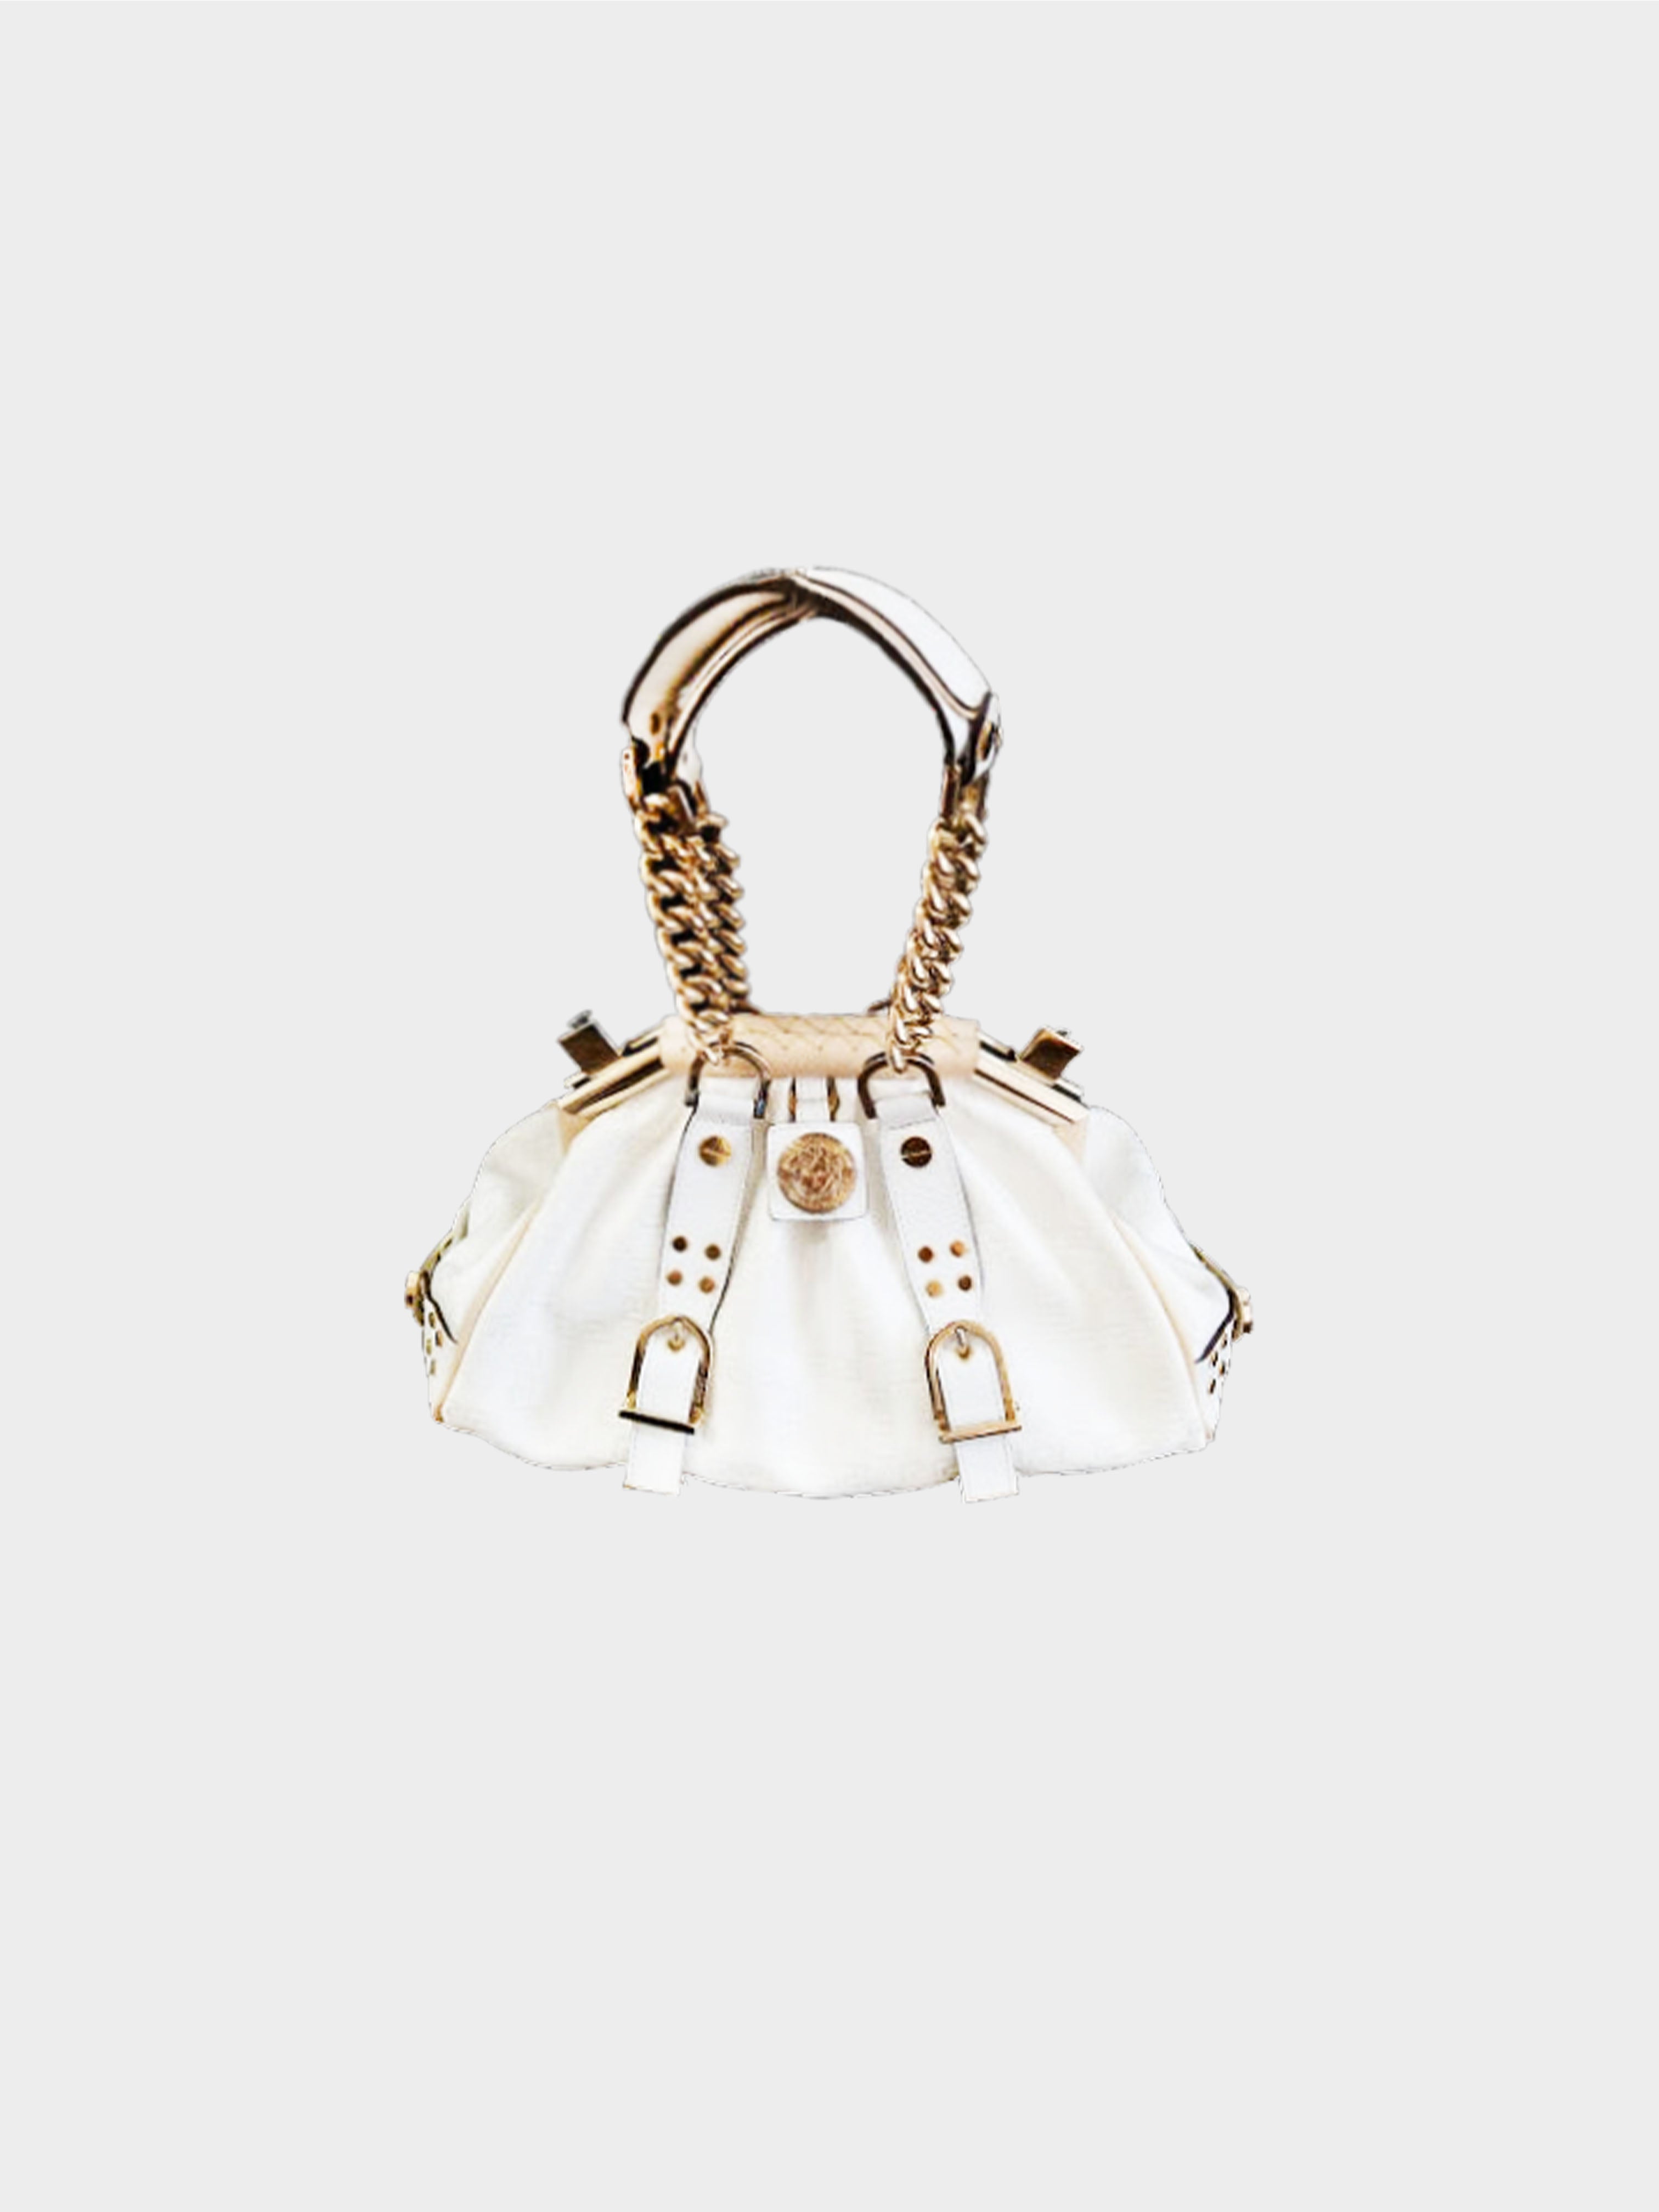 Louis Vuitton x Karl Lagerfeld 2014 Rare Punching Bag · INTO